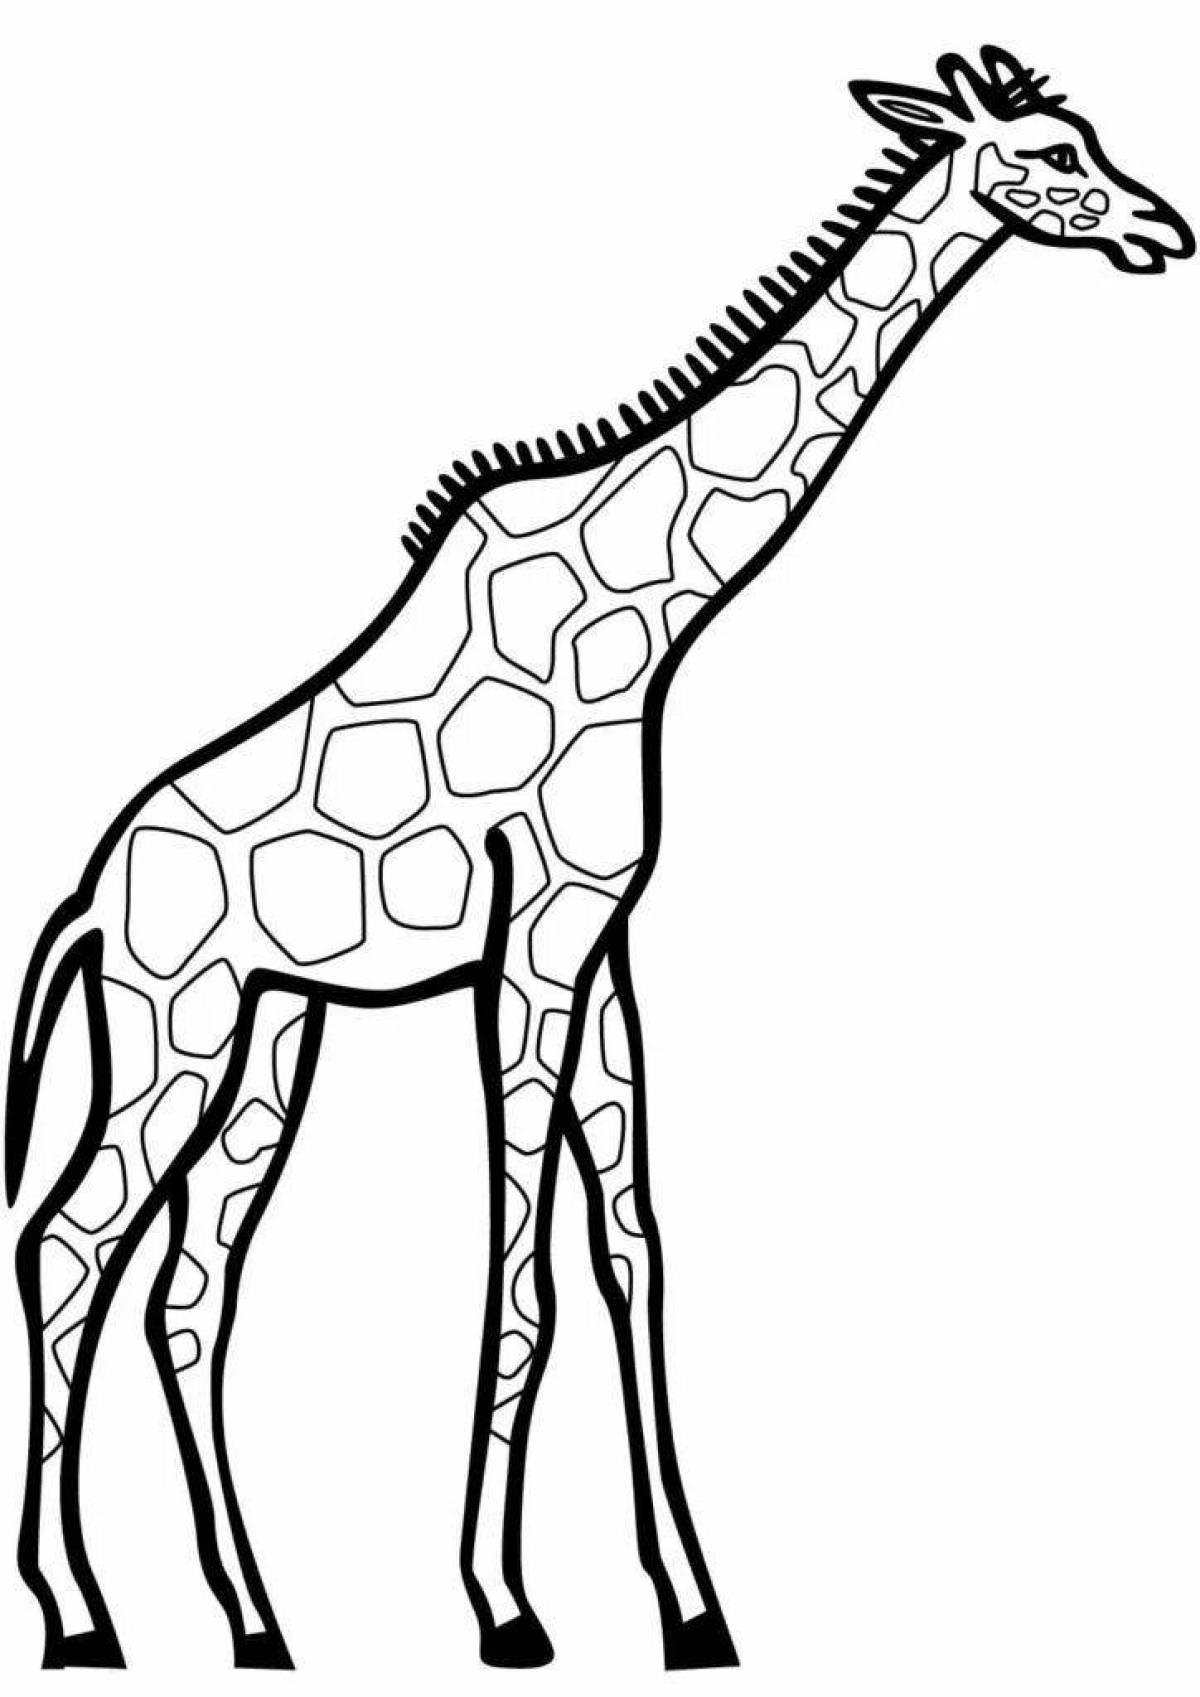 Vibrant giraffe coloring